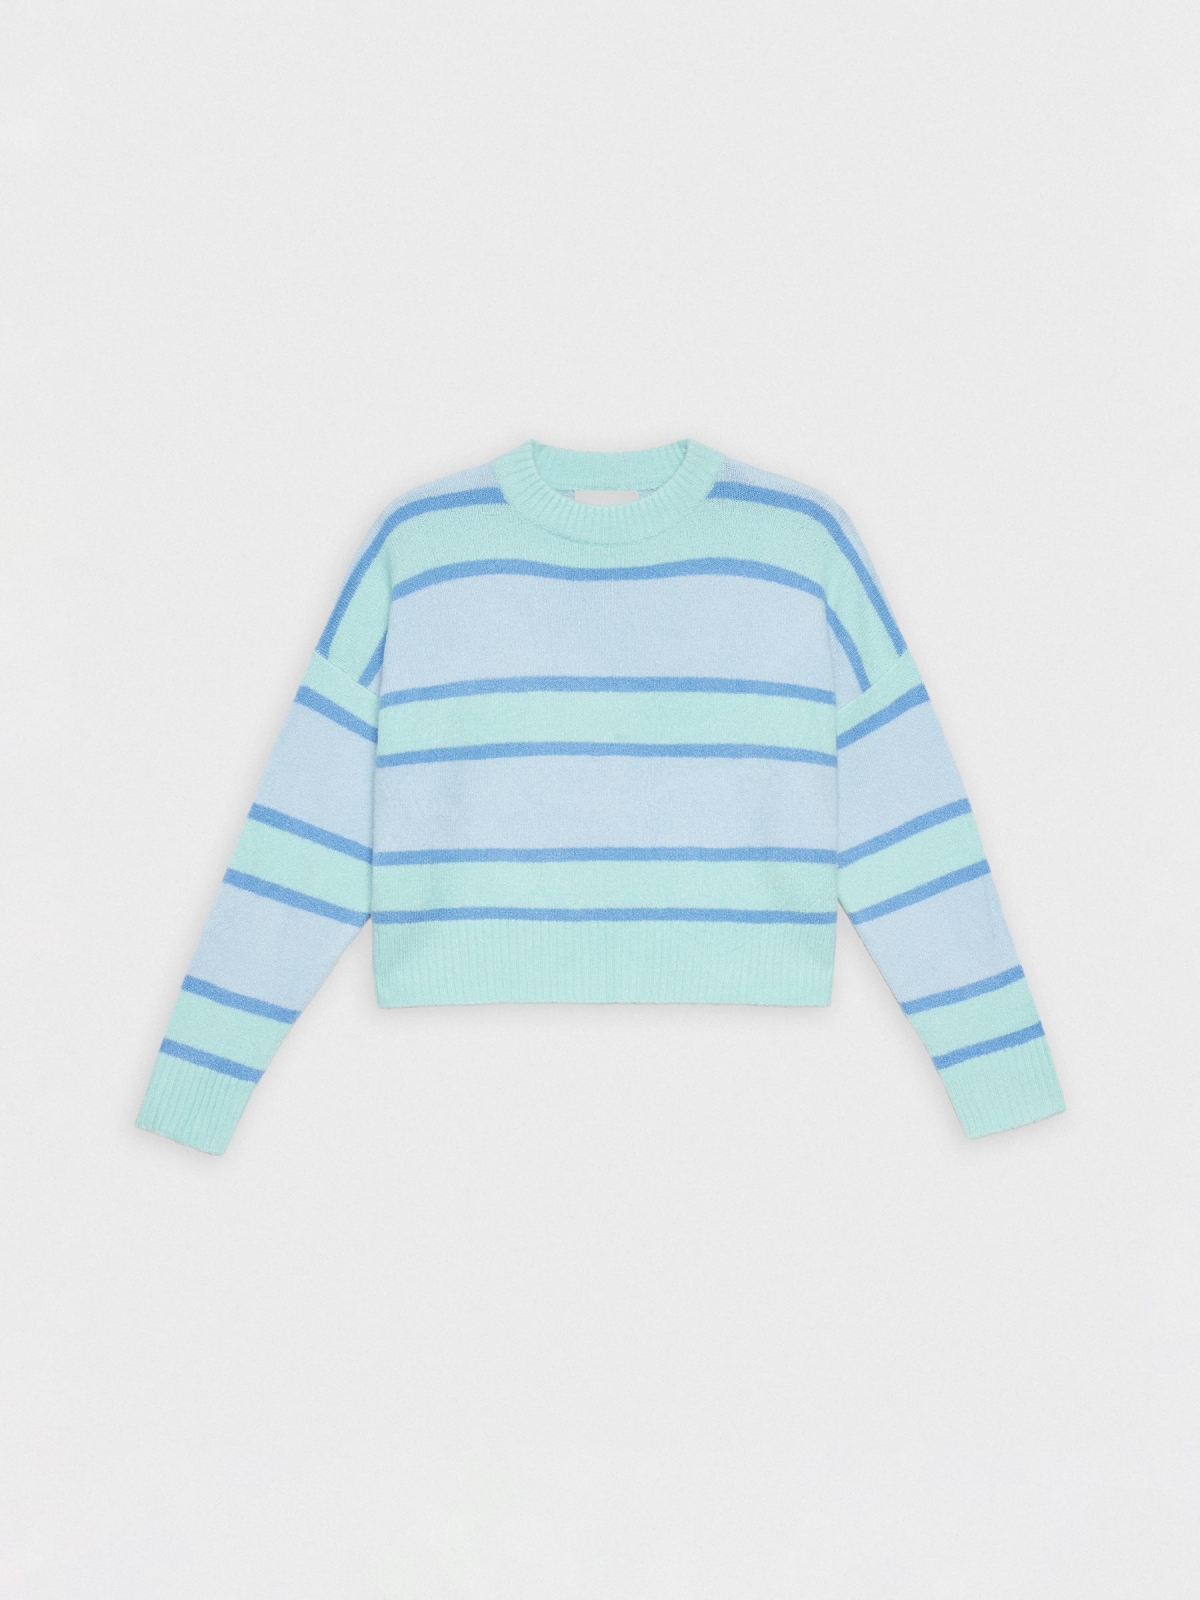  Oversized striped sweater light blue